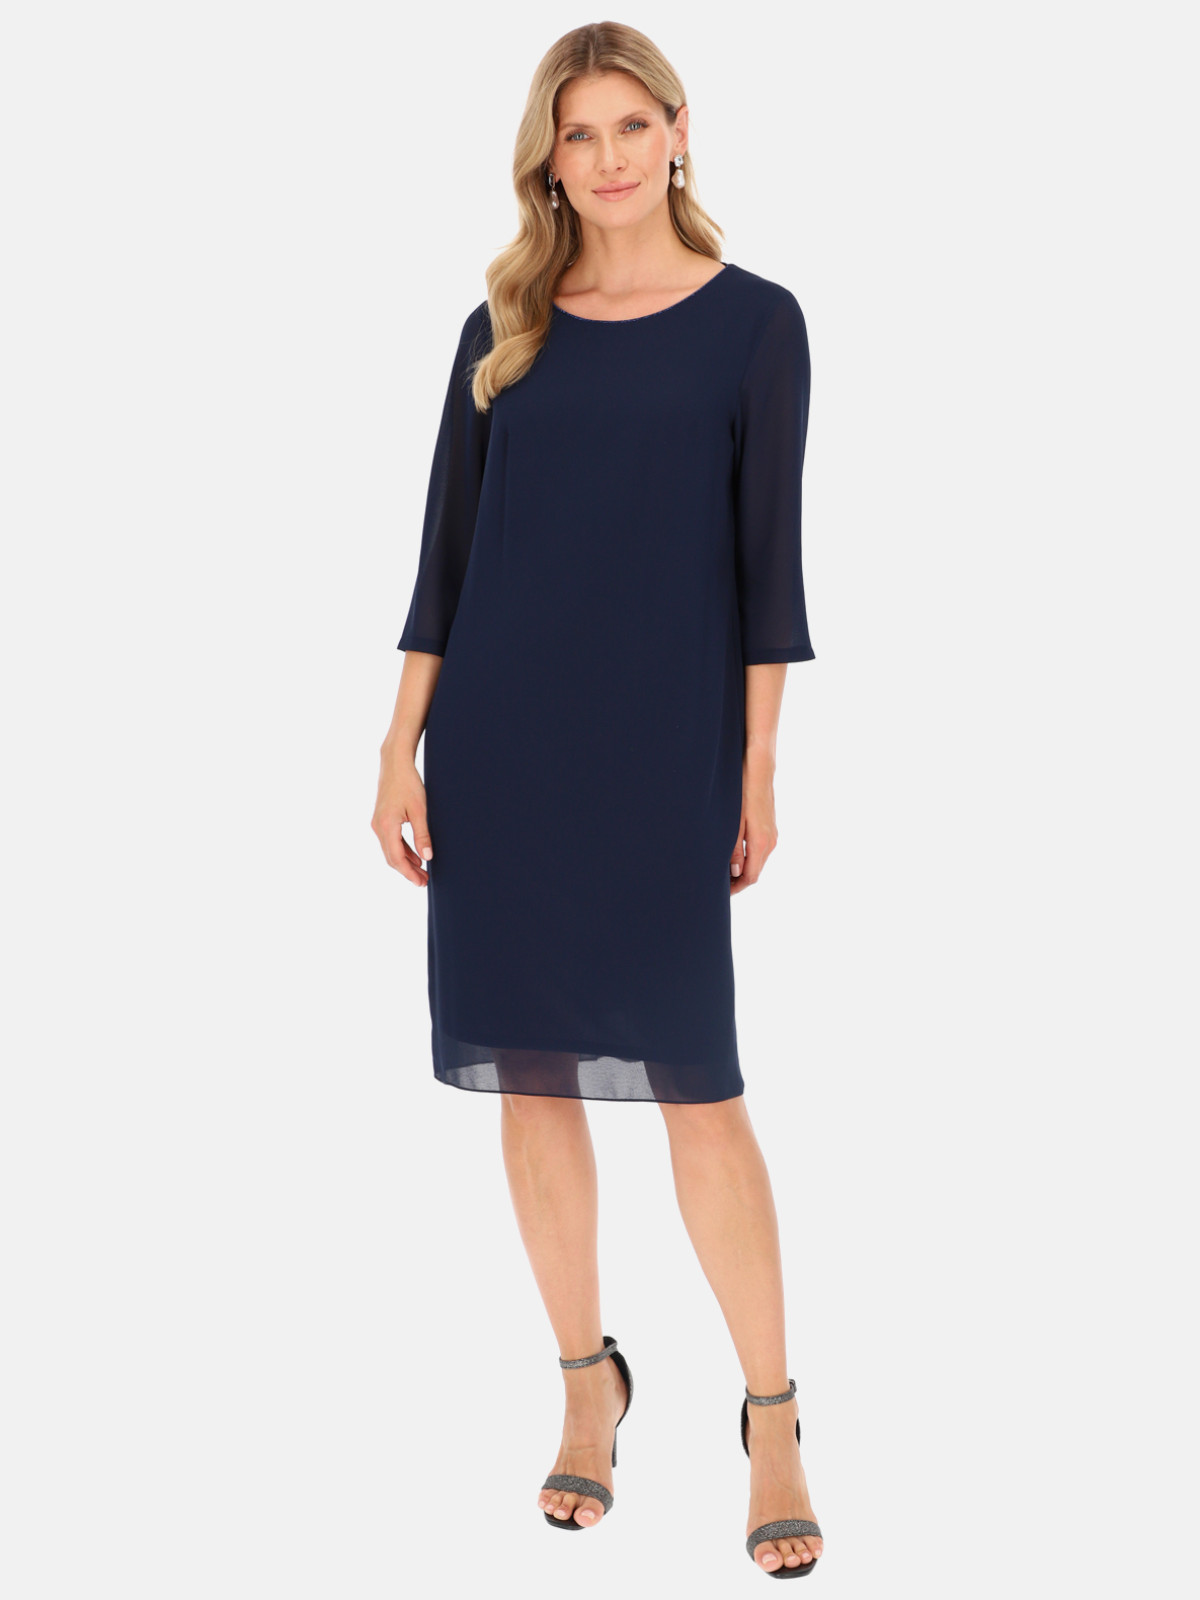 Potis & Verso Woman's Dress Dalia Navy Blue